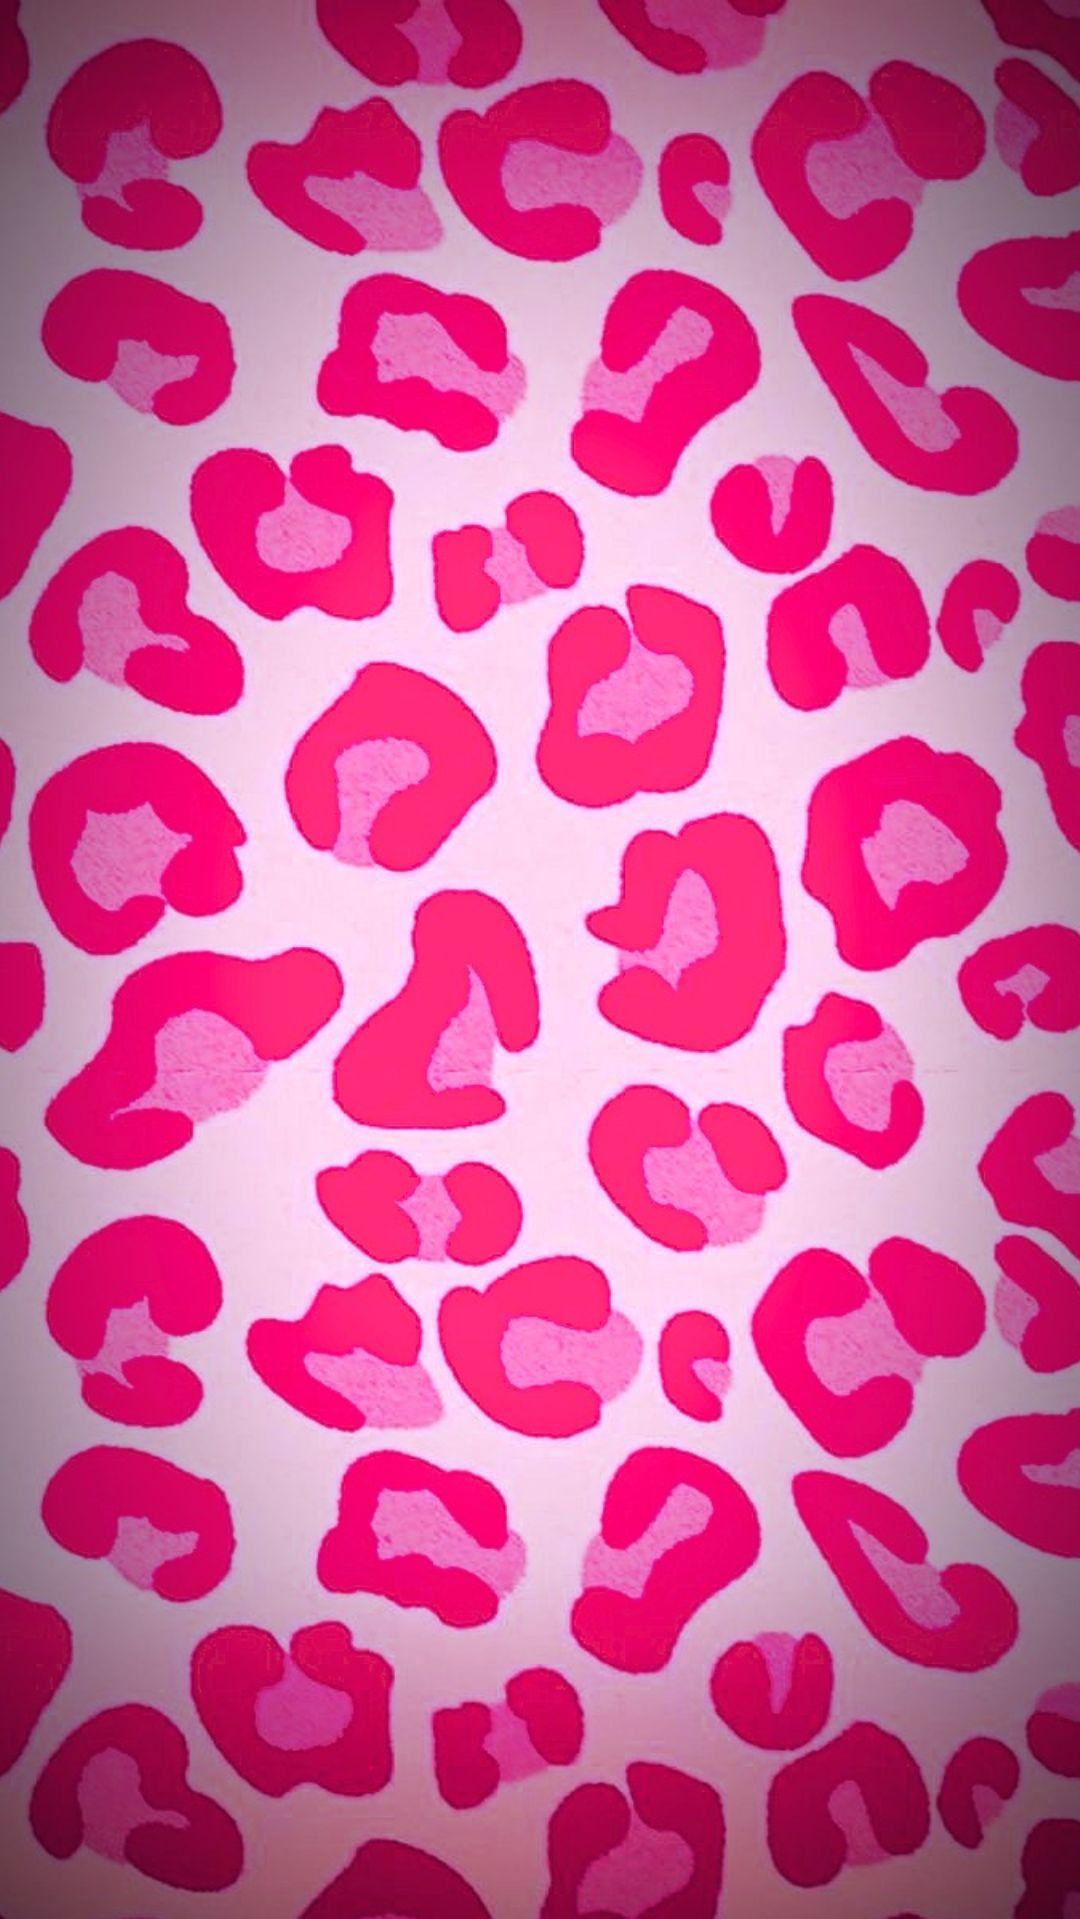 Free download Pink Preppy Wallpapers Top 20 Best Pink Preppy ...